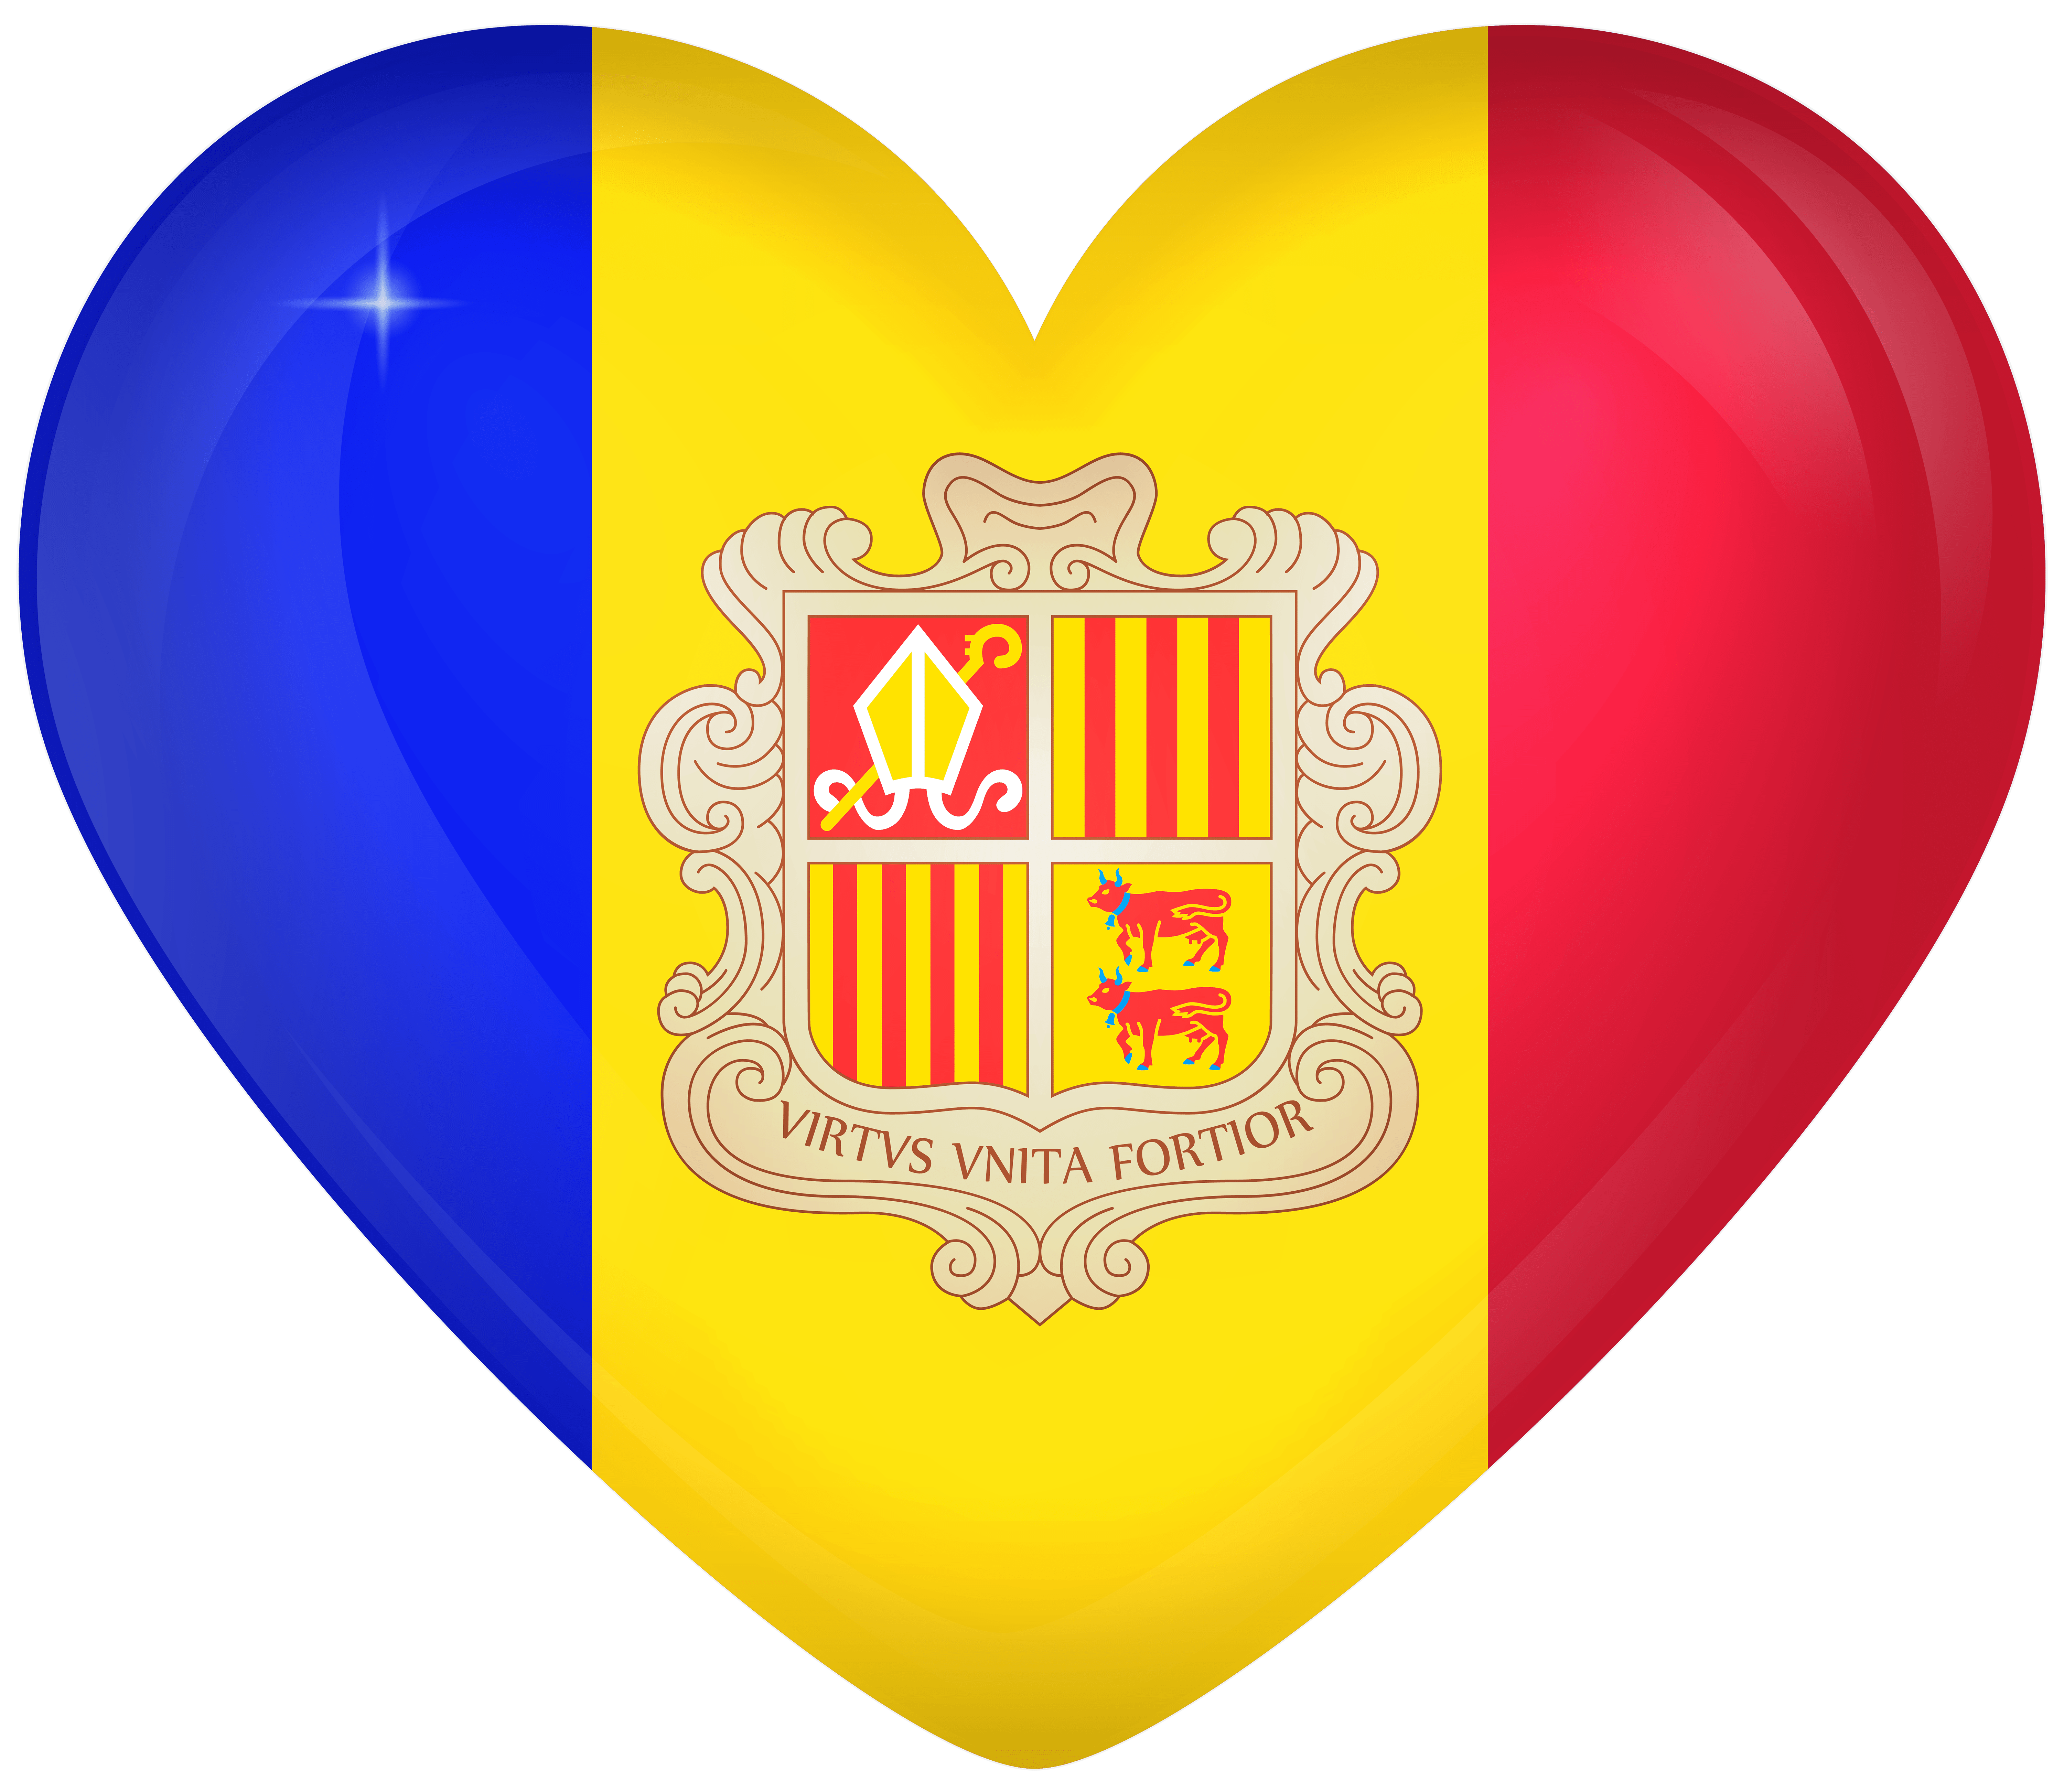 Andorra Large Heart Flag